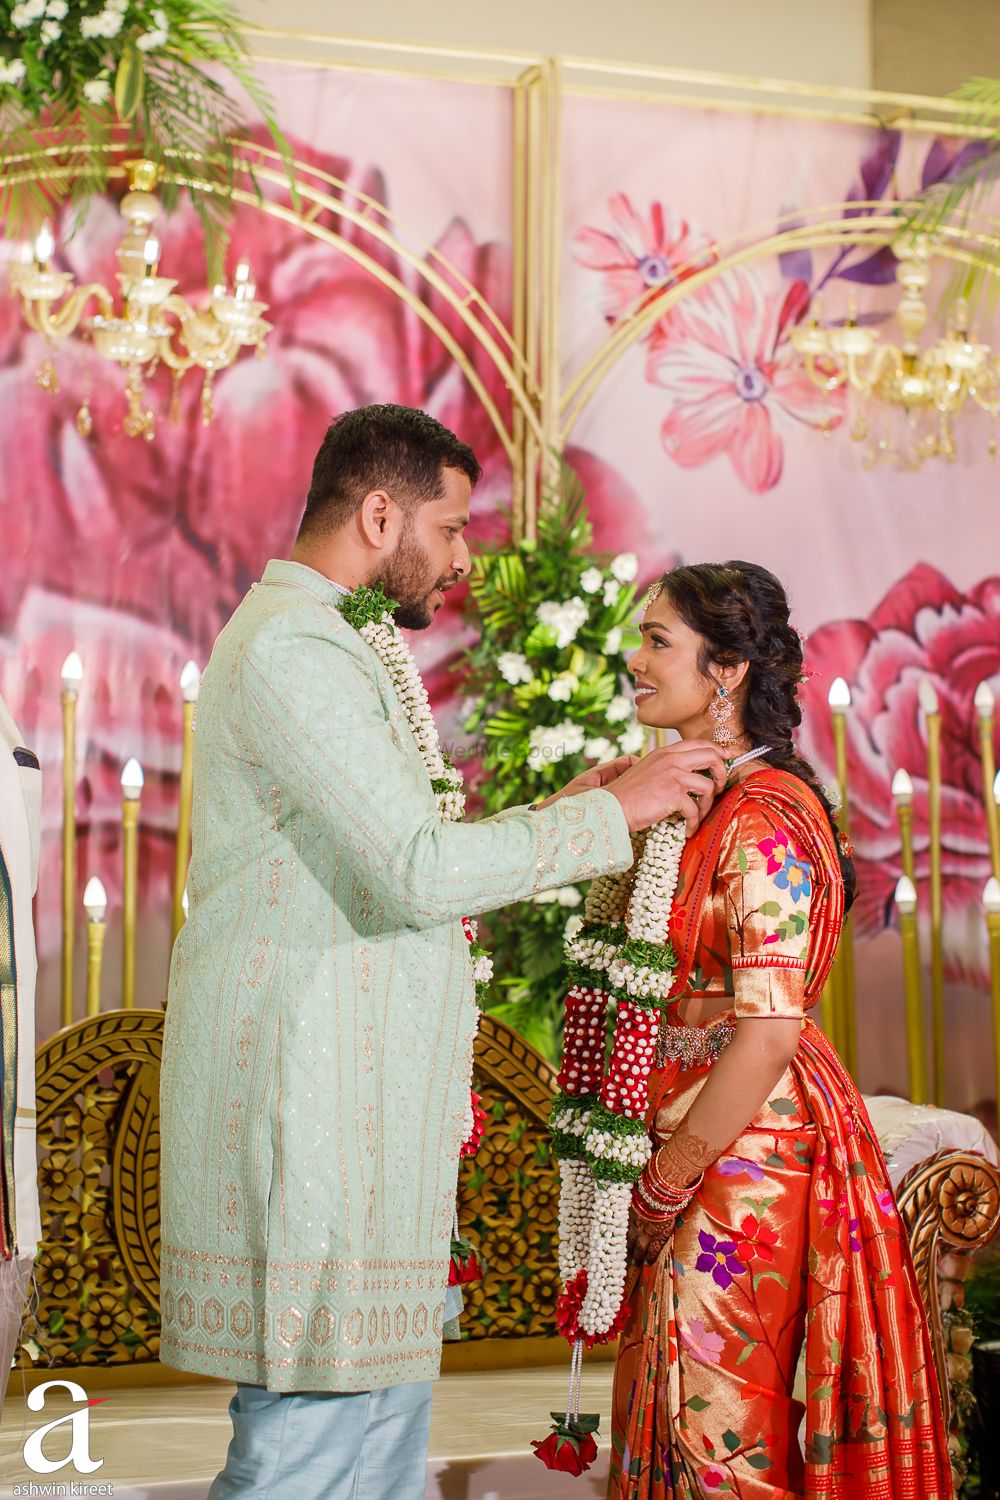 Photo From Akshetha's Engagement - By Ashwin kireet Photography